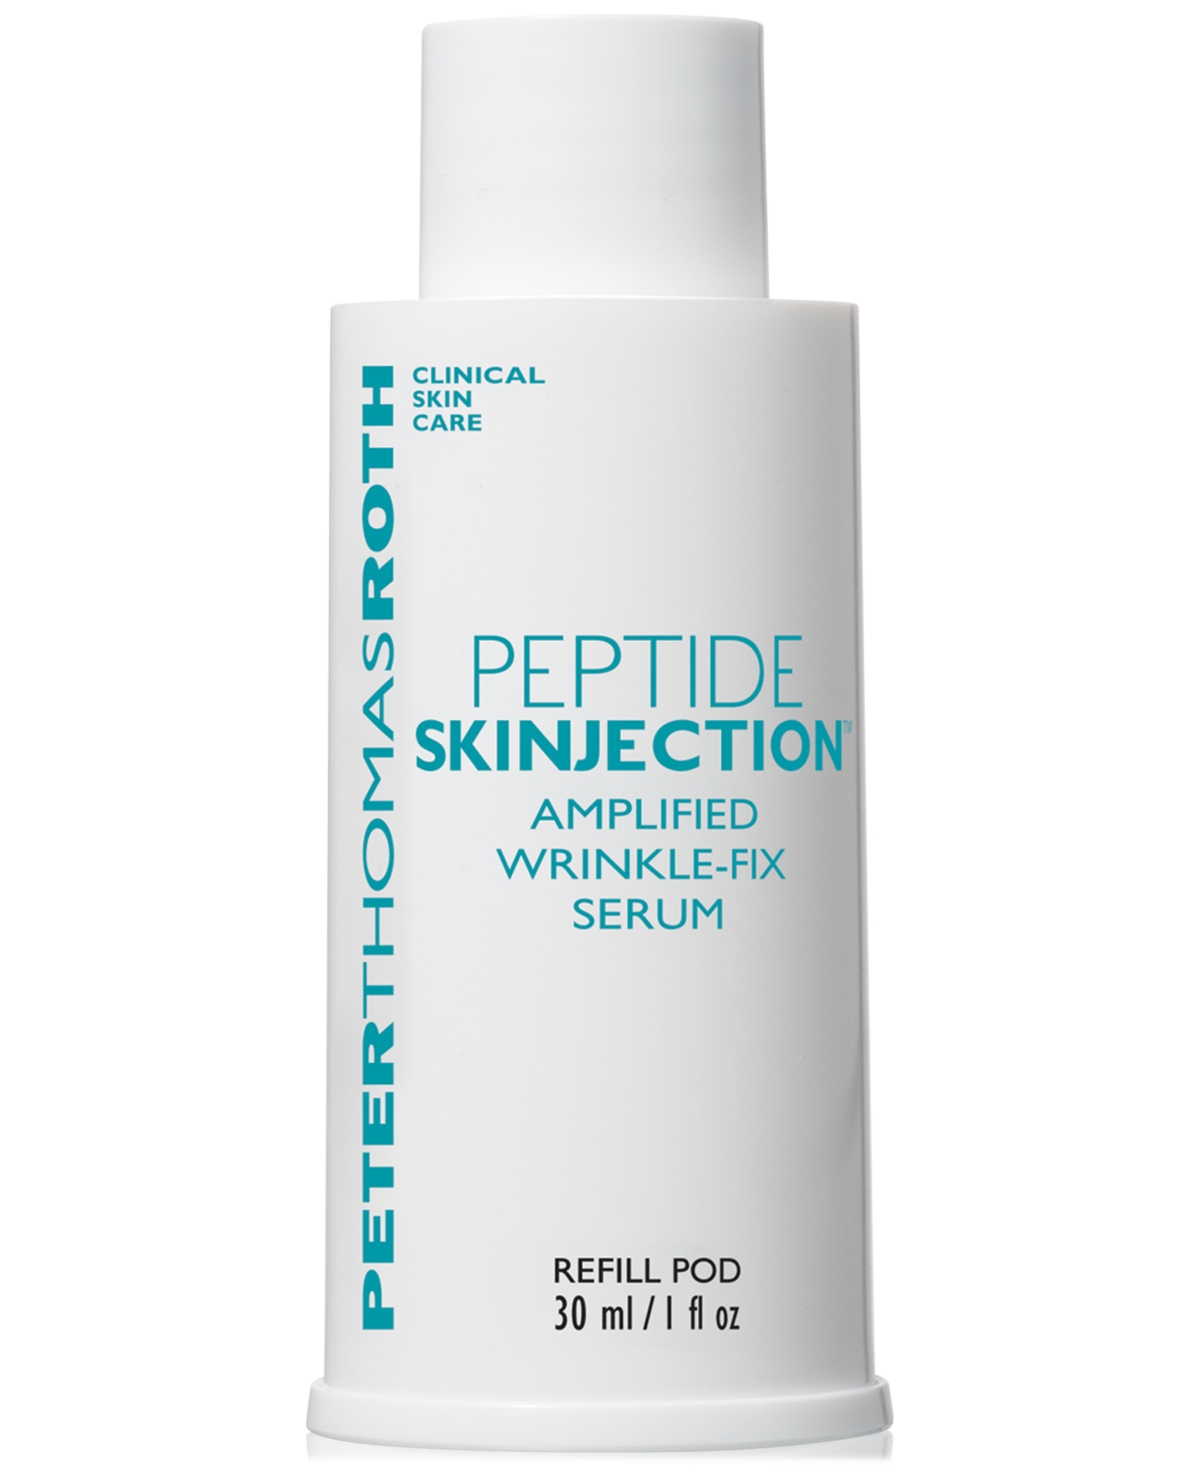 PeptideÂ Skinjection Amplified Wrinkle-Fix Serum Refill Pod, 1 oz